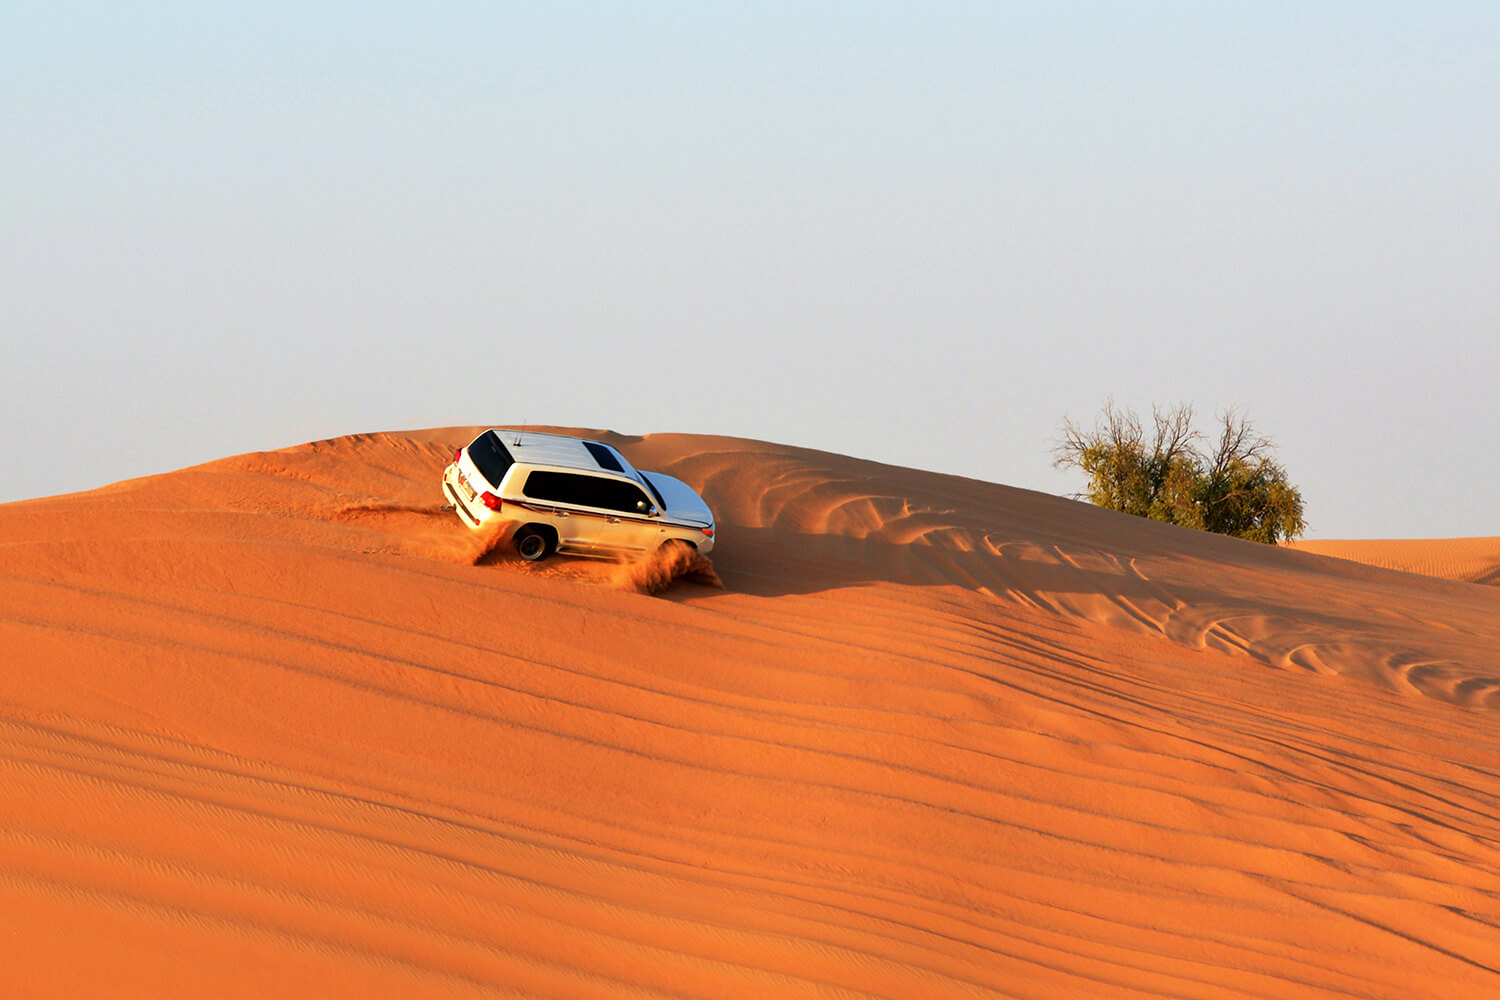 Sahara Desert Tour - 4x4 Fun In The Desert